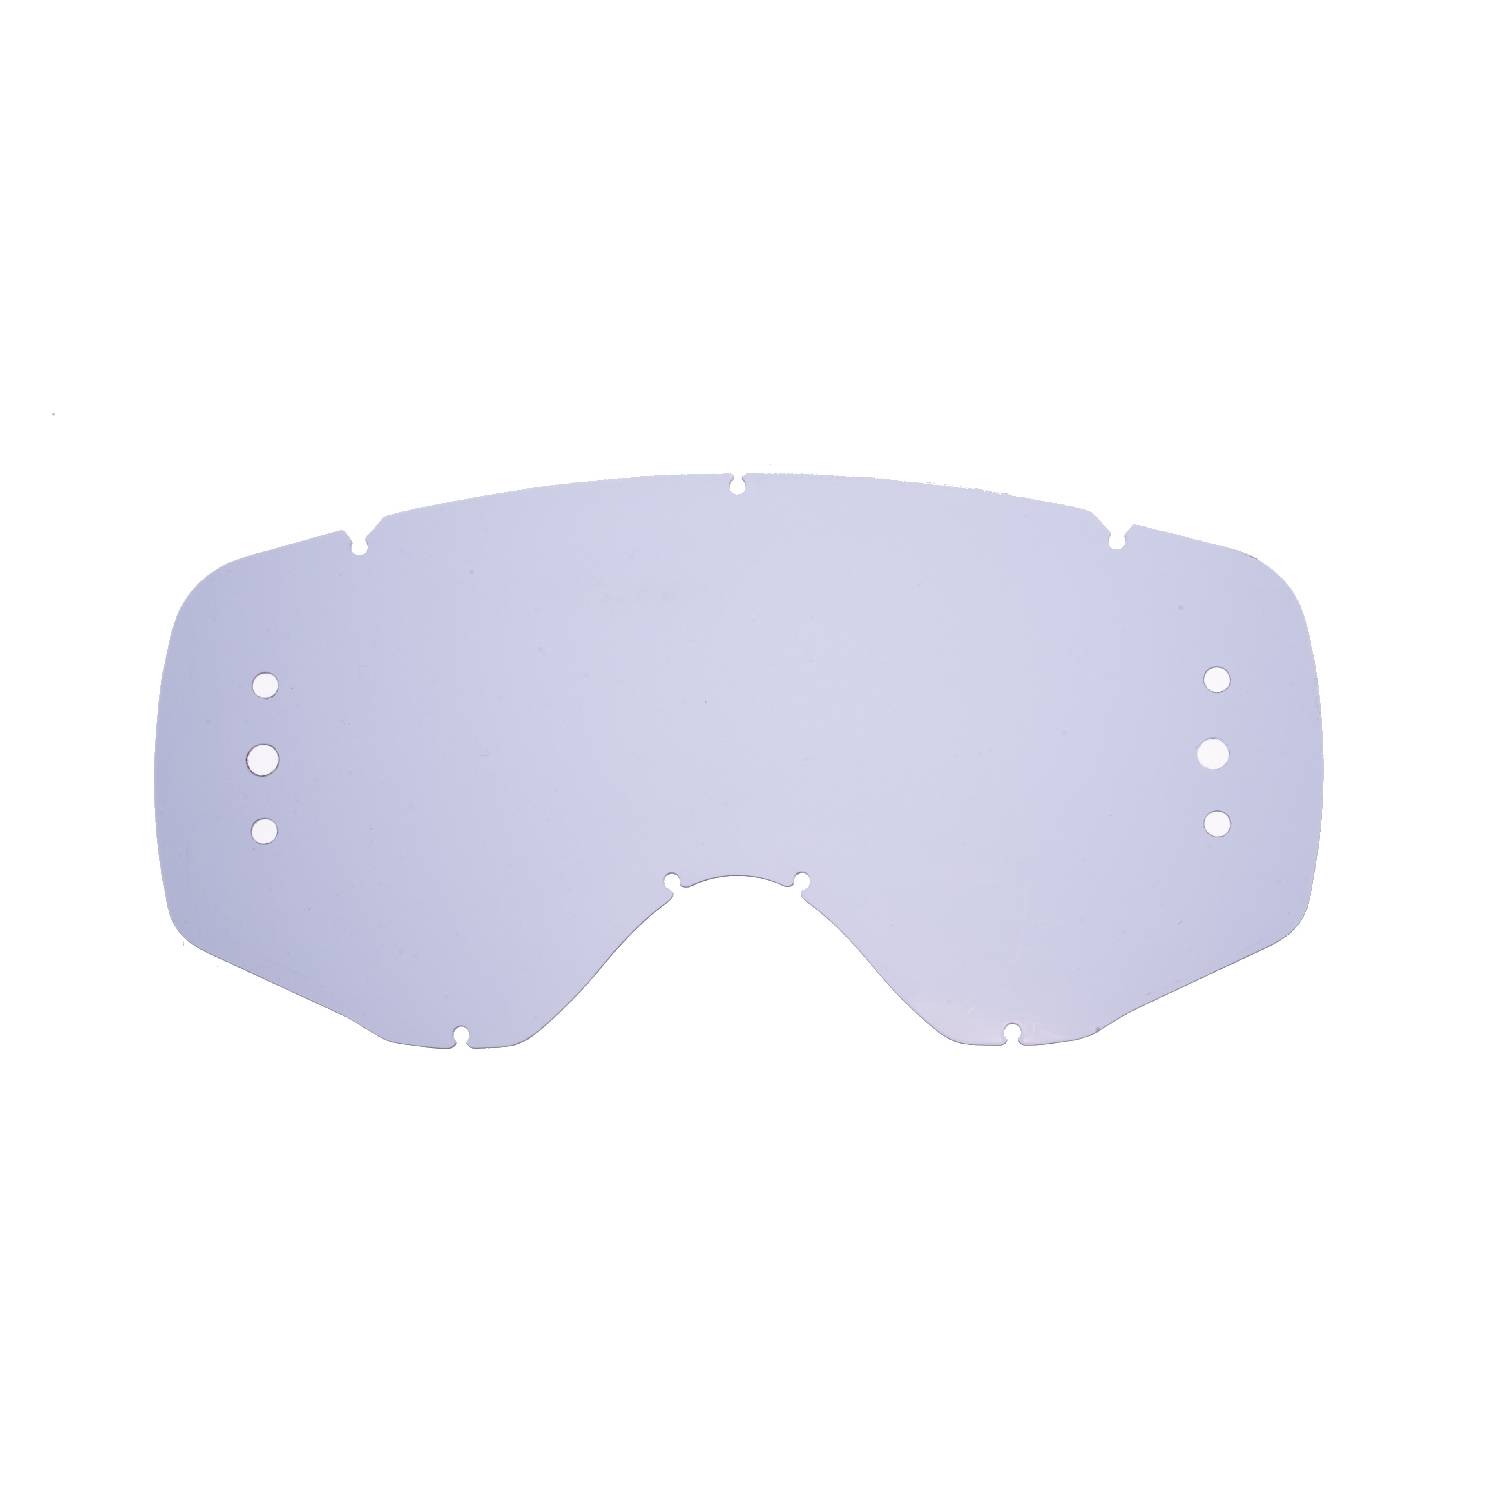 ROLL-OFF lenses with smokey lense compatible for Ethen Zerosei GP/ Basic / Evolution/ Mud Mask